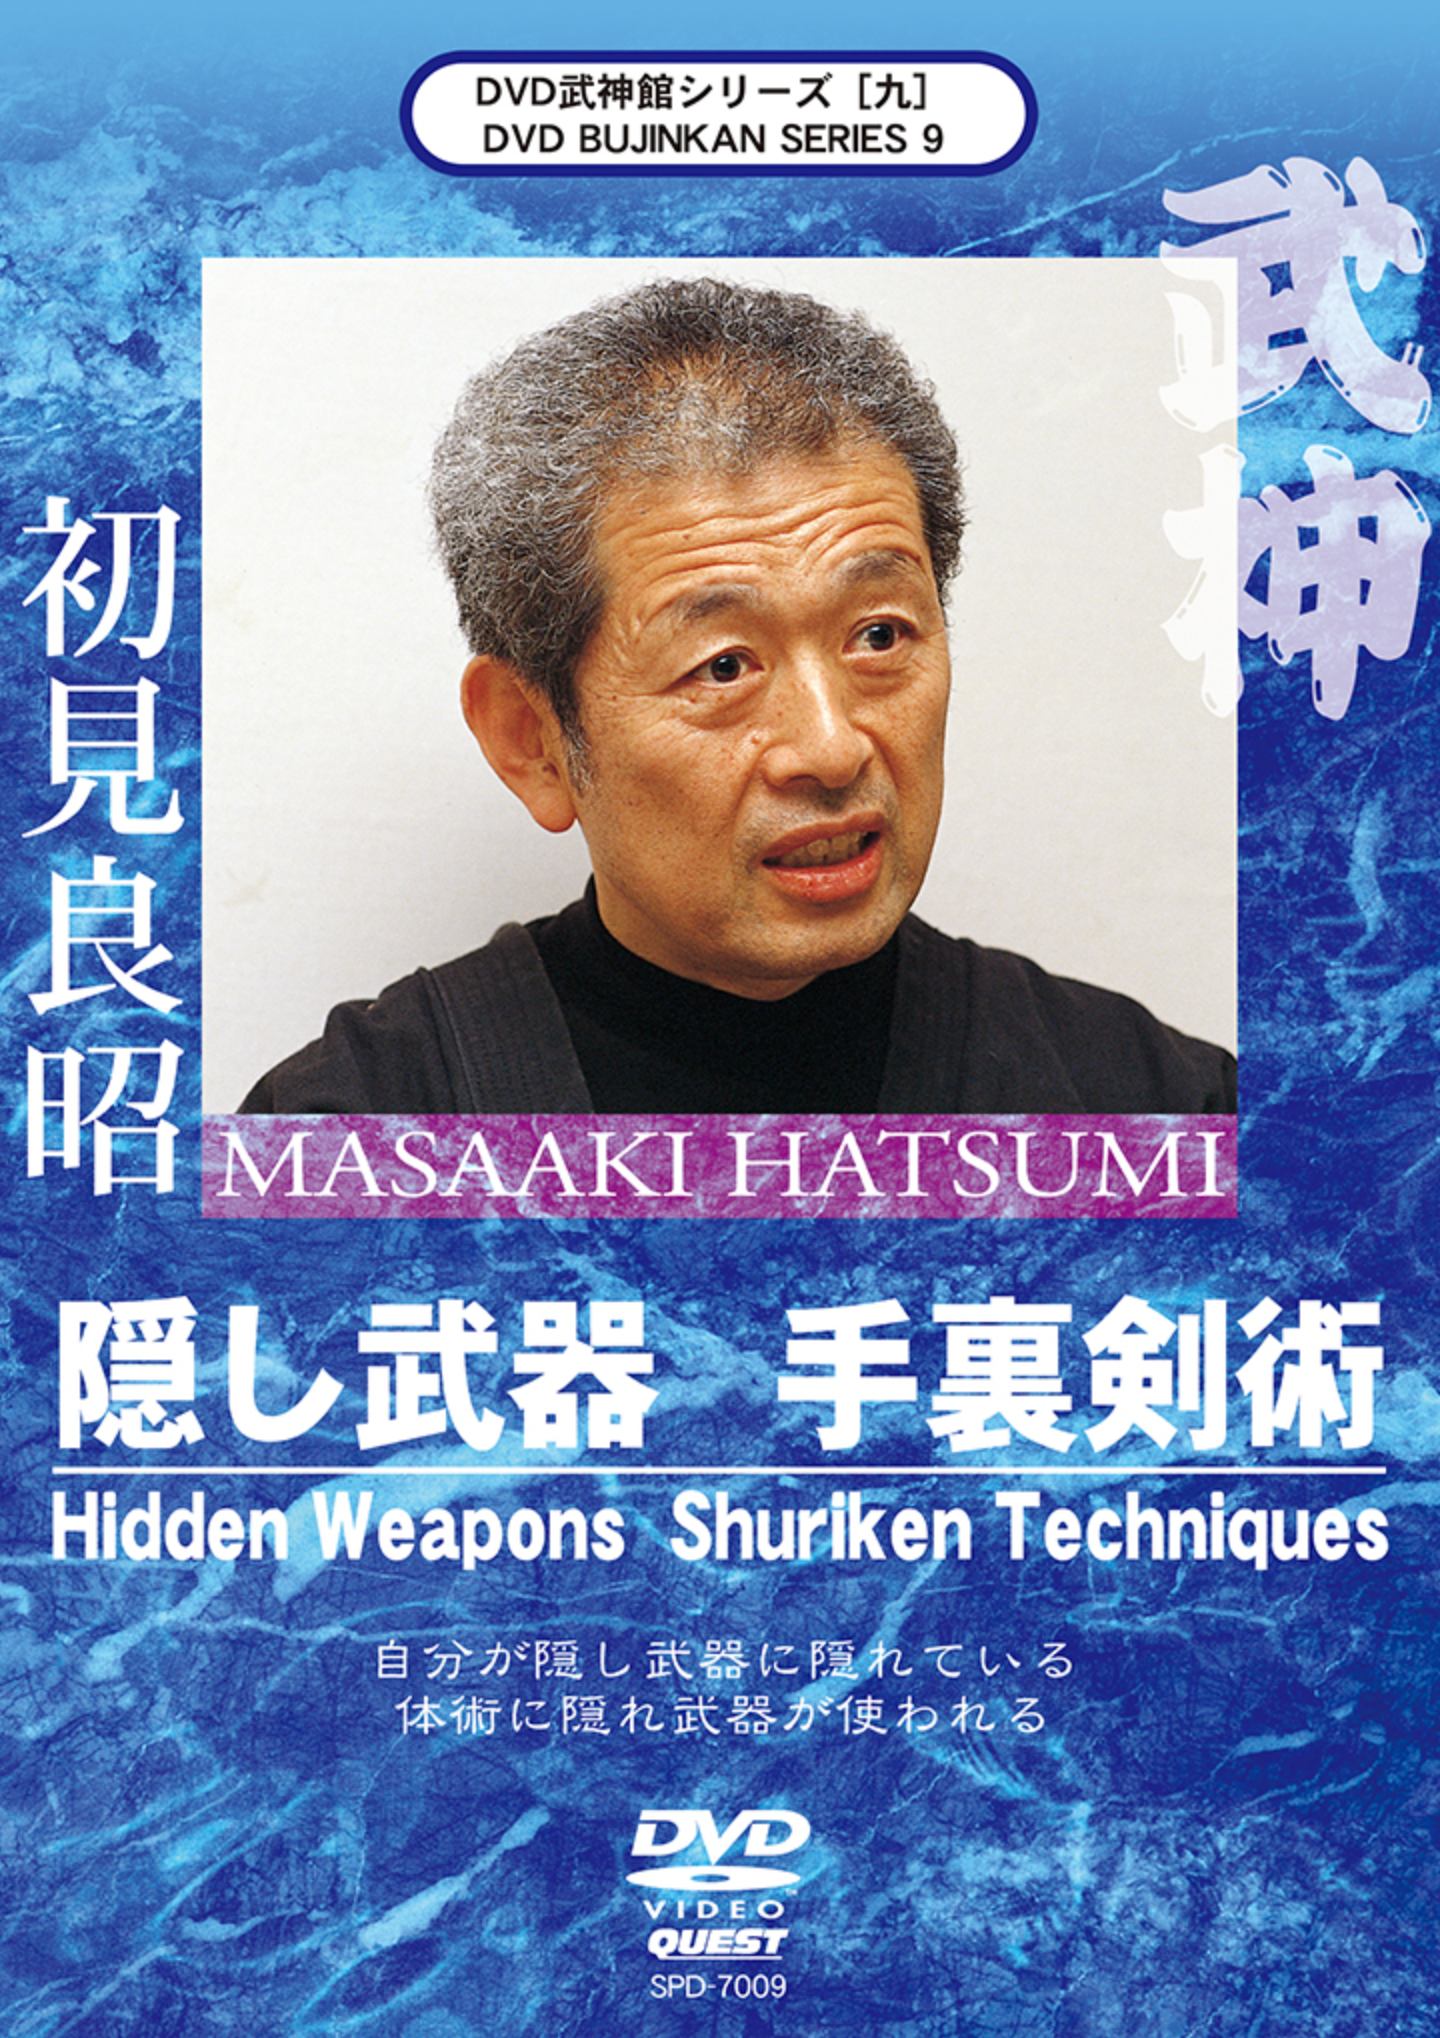 Bujinkan DVD Series 9: Hidden Weapons Shuriken Techniques with Masaaki Hatsumi - Budovideos Inc